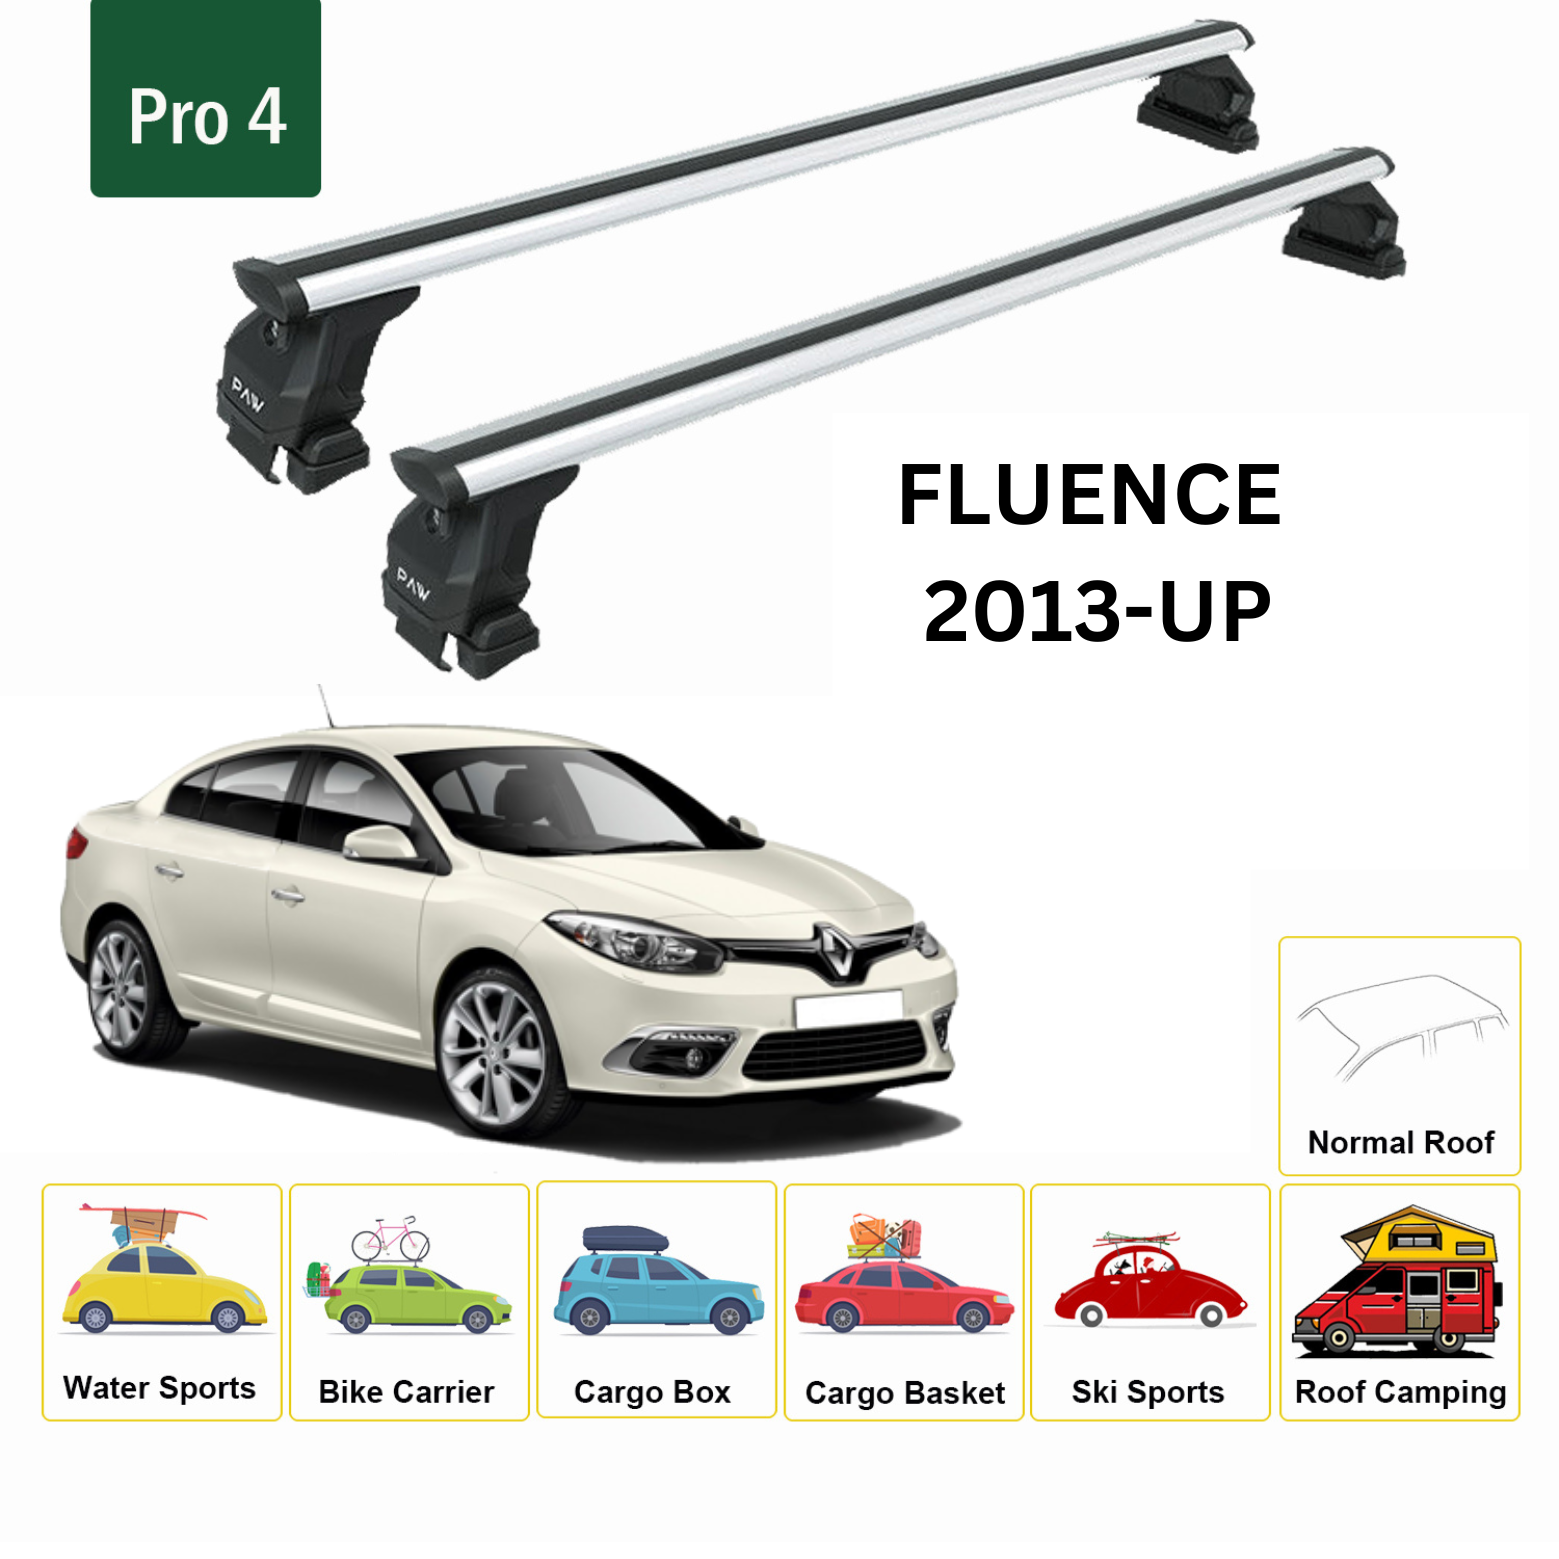 For Renault Fluence 2013-Up Roof Rack System, Aluminium Cross Bar, Metal Bracket, Normal Roof, Silver